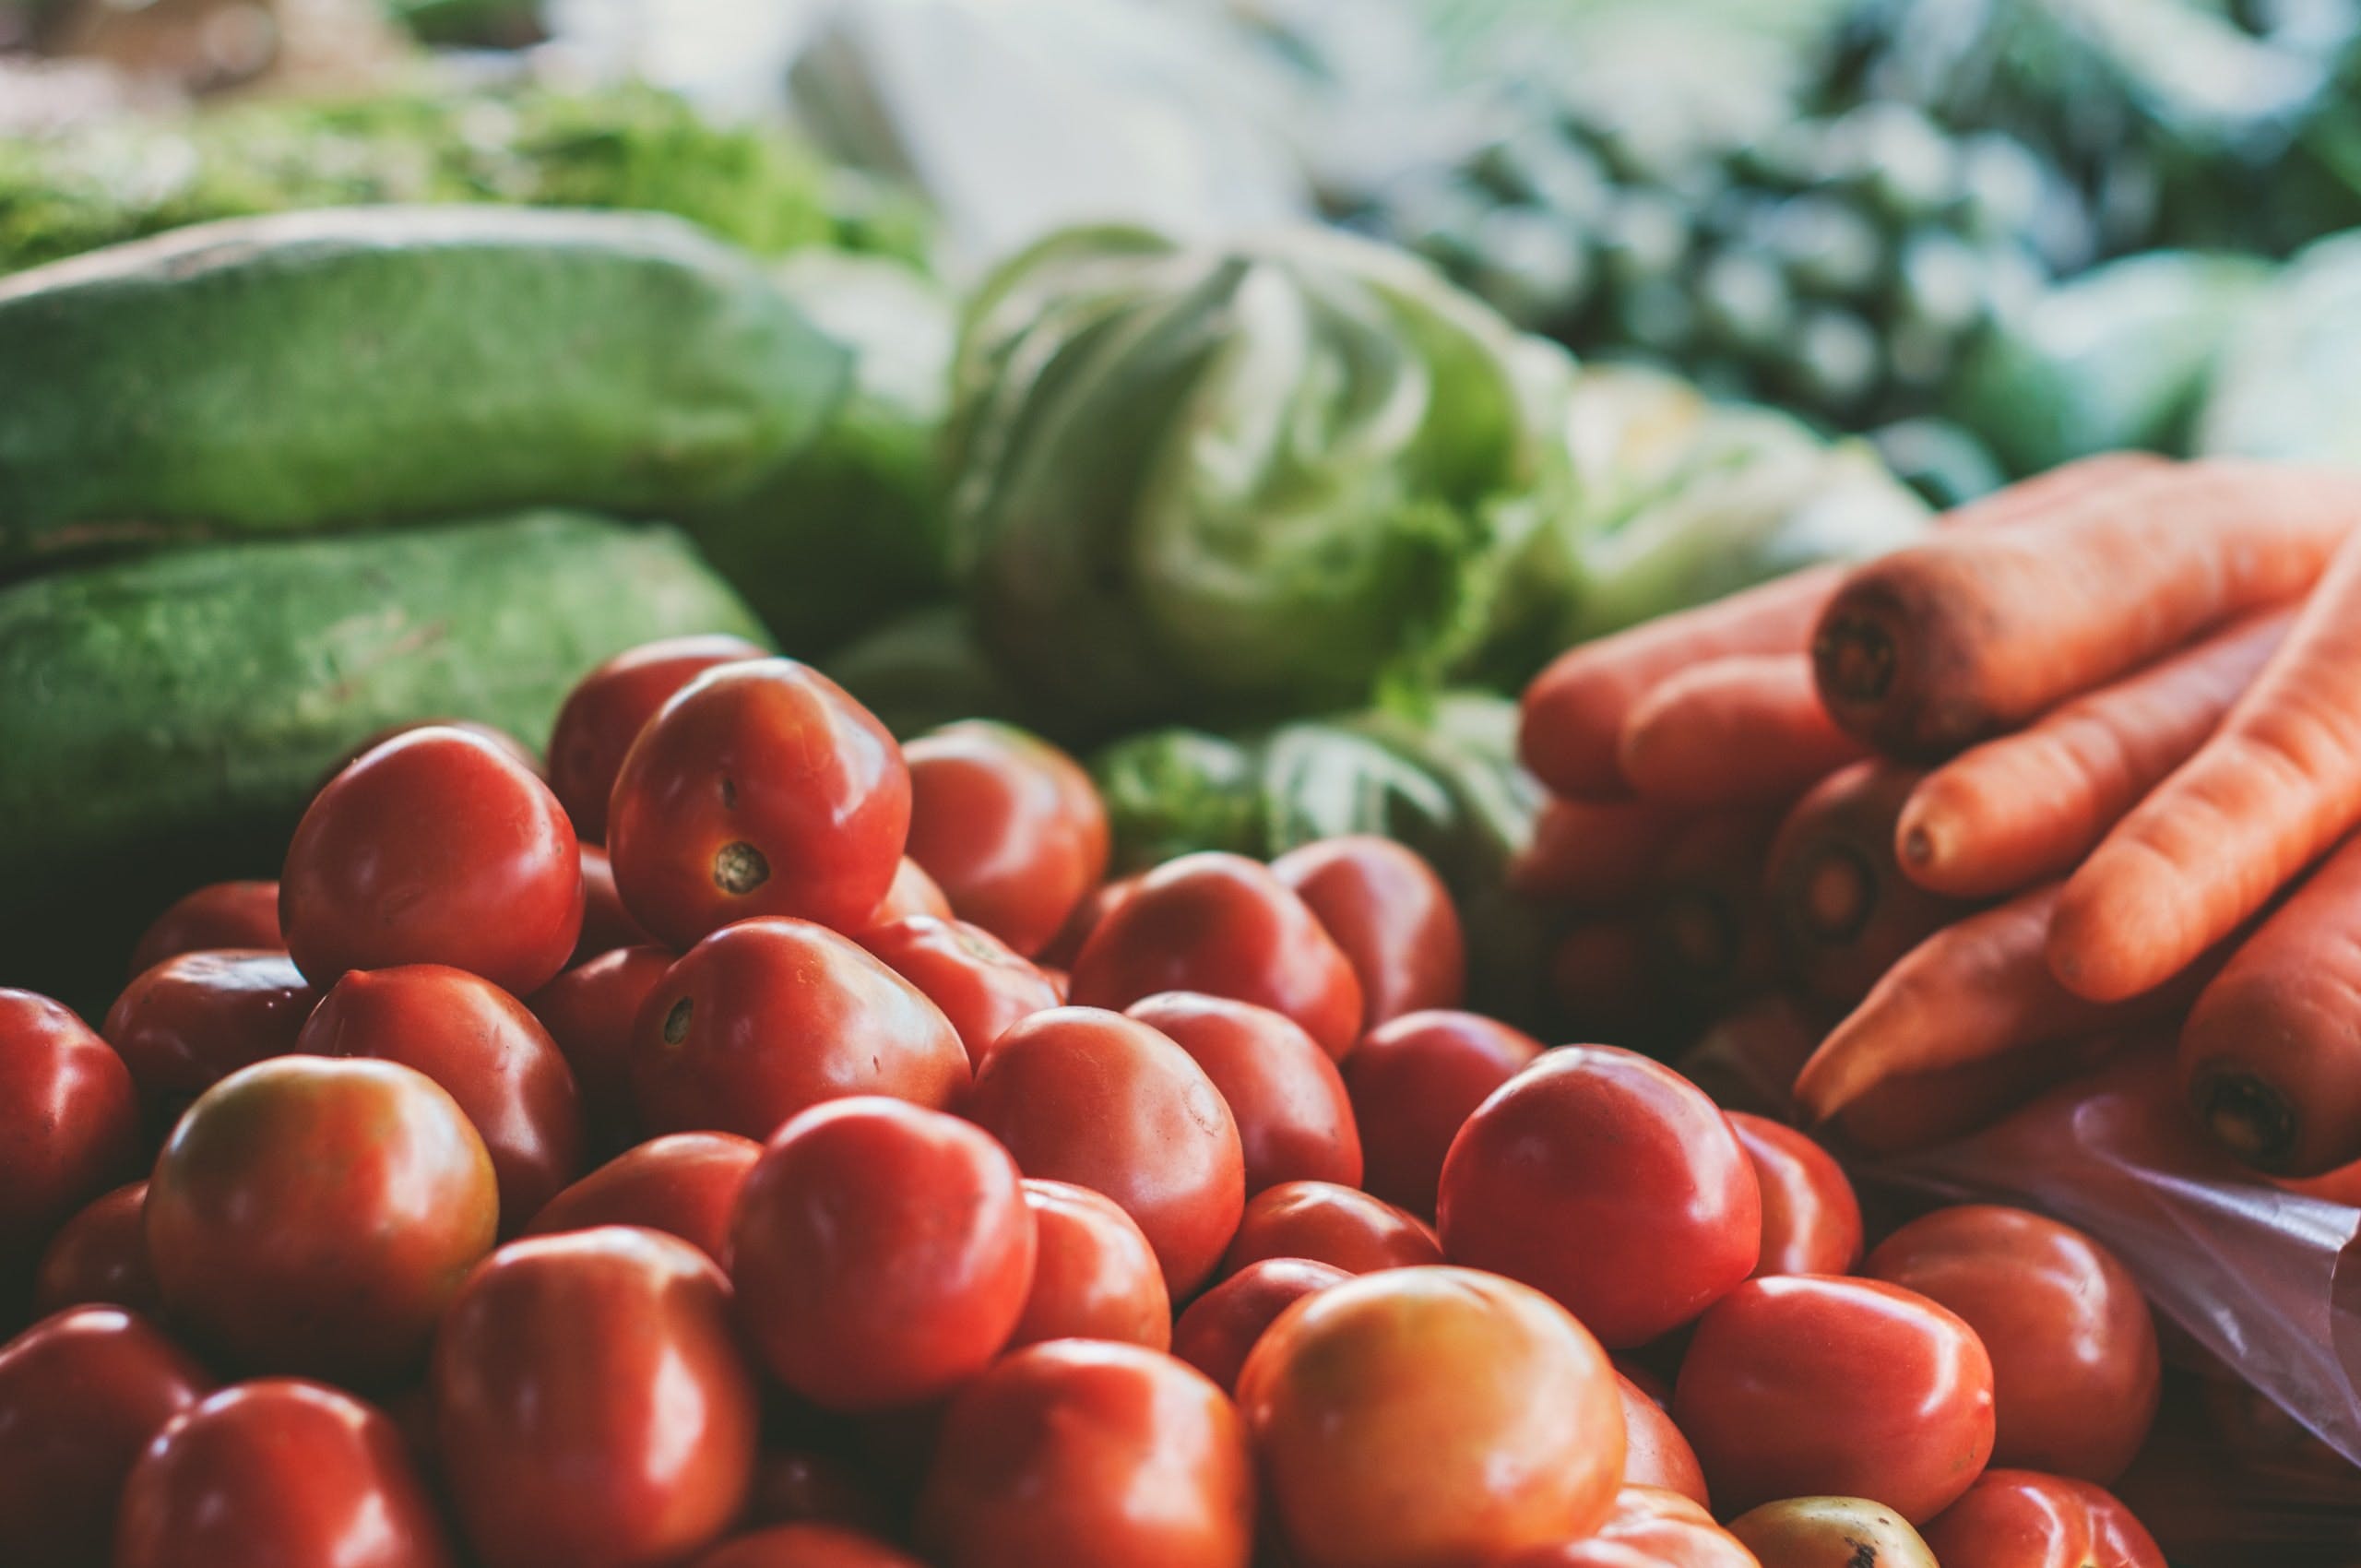 Natural foods,Local food,Food,Whole food,Vegetable,Fruit,Plant,Vegan nutrition,Superfood,Tomato